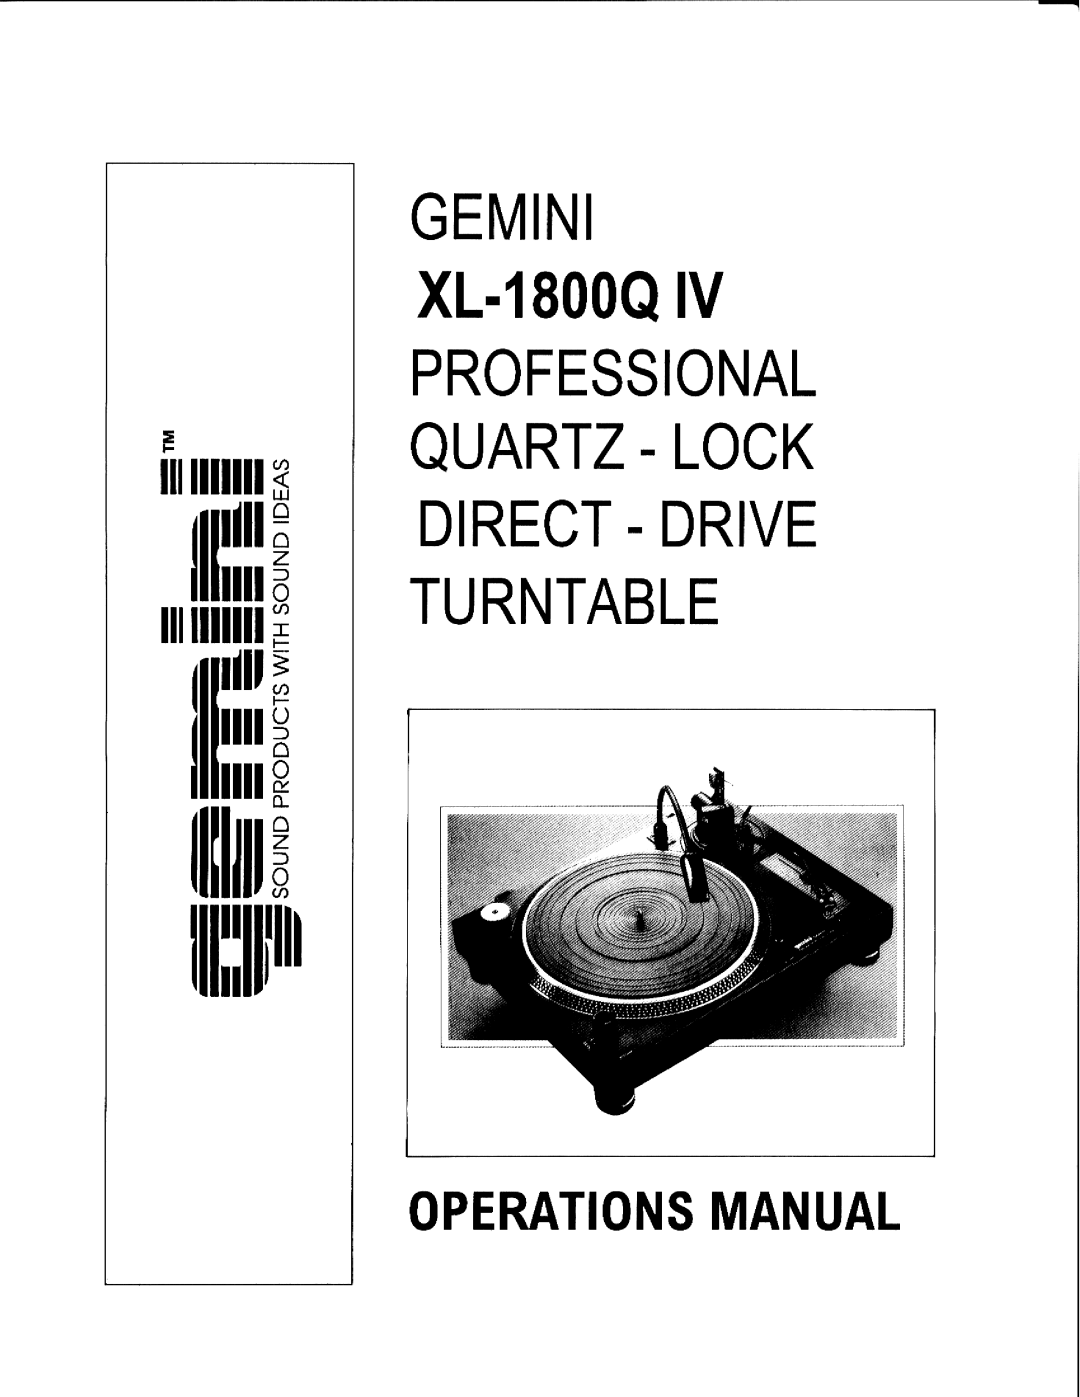 Gemini XL-1800Q IV manual 